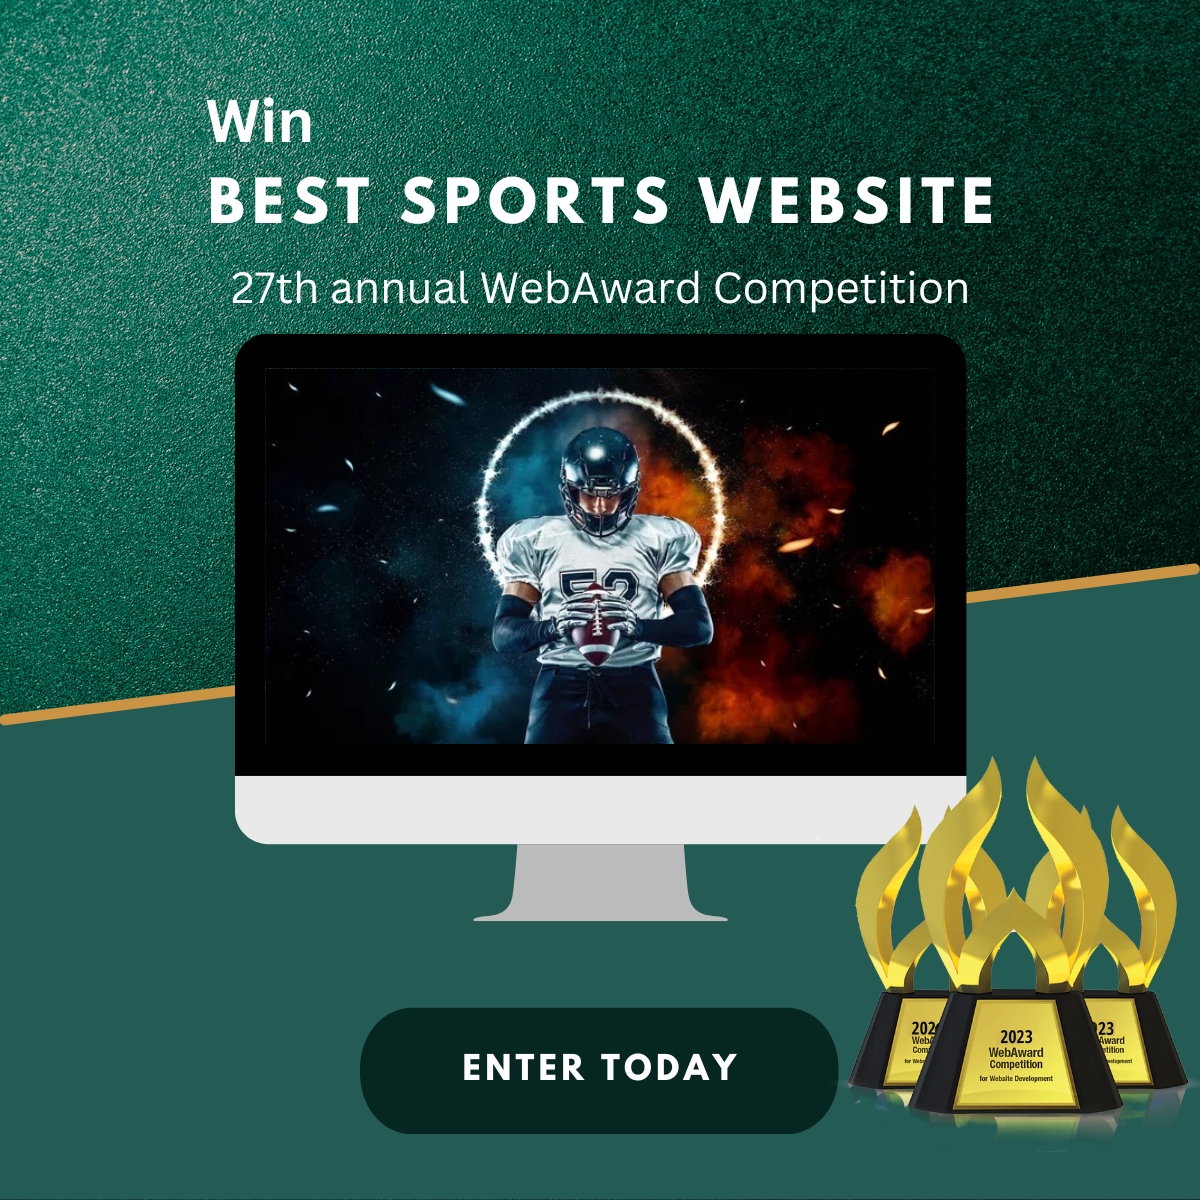 Score Big & Win Best Sports Website at @WebMarketingAssoc 27th #WebAward for #WebsiteDevelopment at WebAward.org Enter by 5.31.23.
#Sports #SportsMarketing #SportsNews #SportsTrends #Sportswebsites #BestSportsWebsite #SportsIndustry #SportsManagement #SportsIndustry